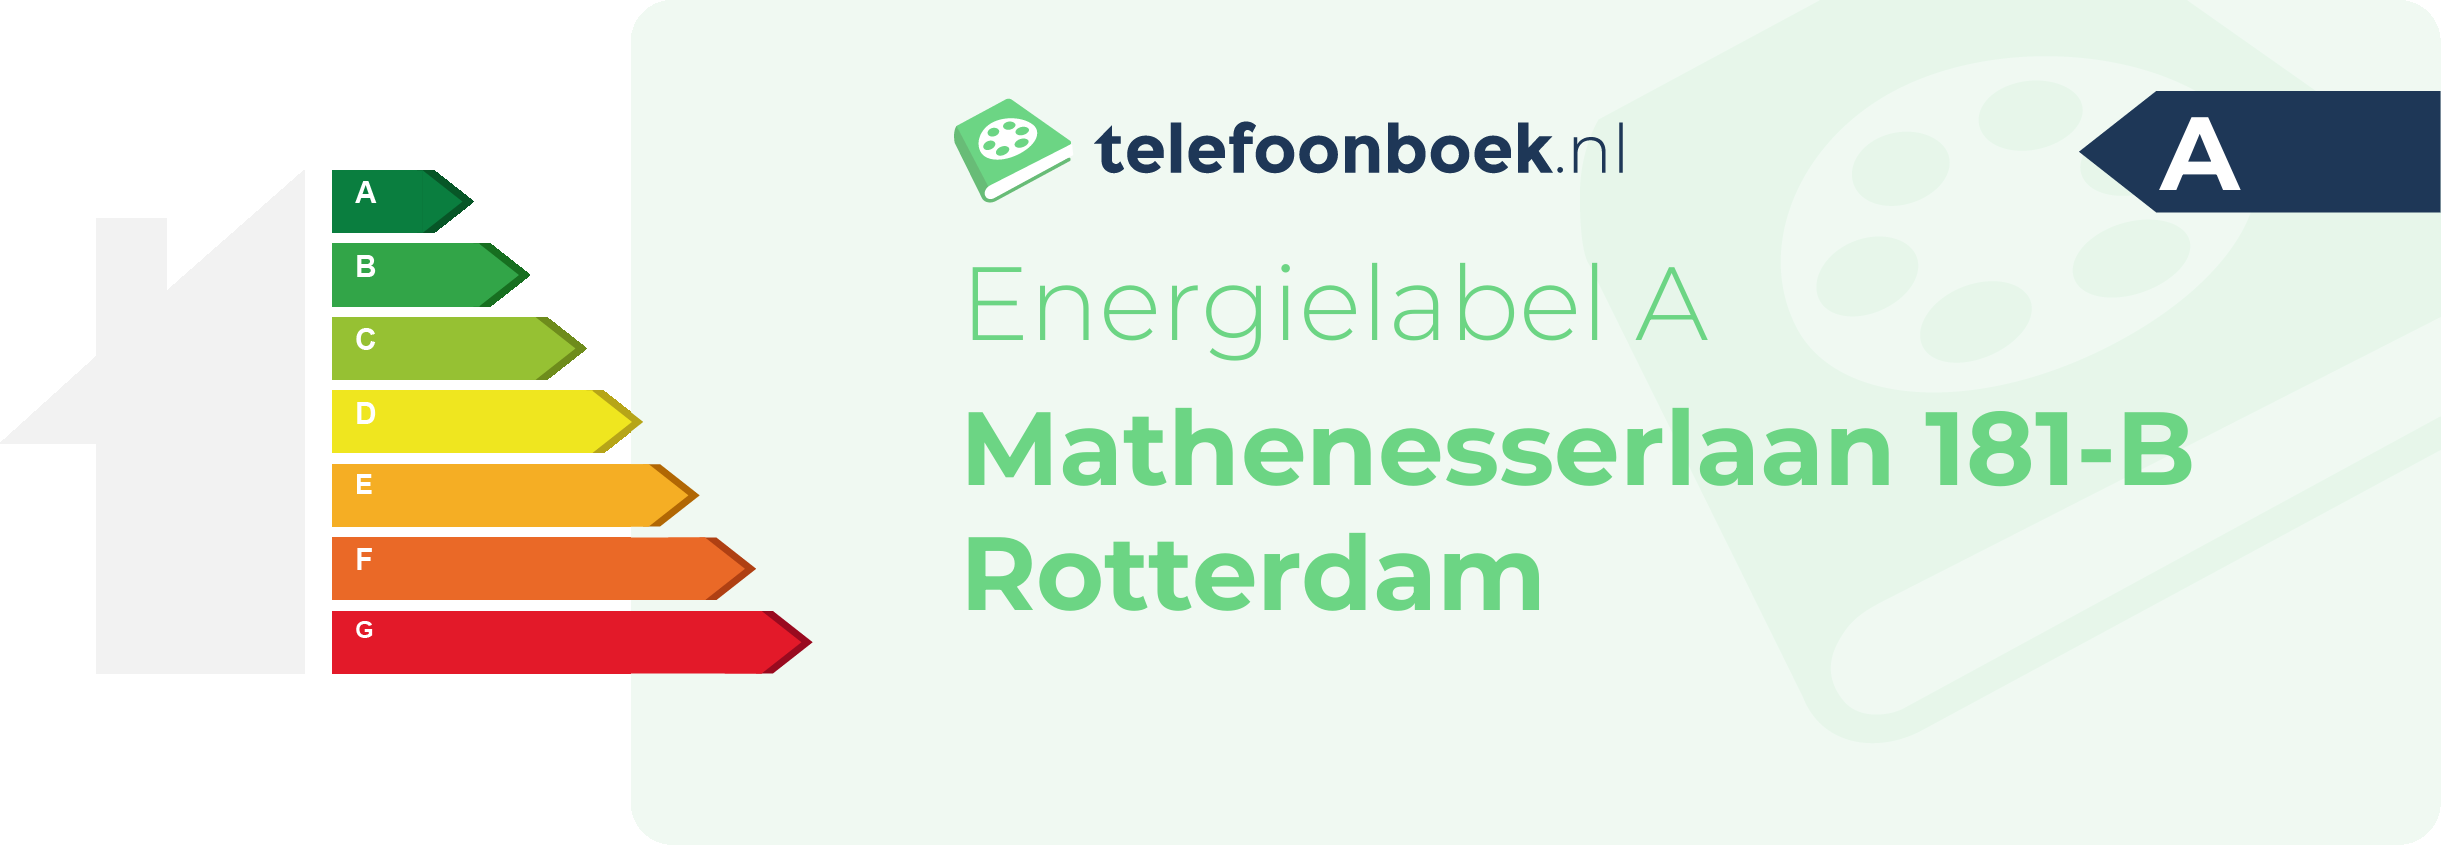 Energielabel Mathenesserlaan 181-B Rotterdam